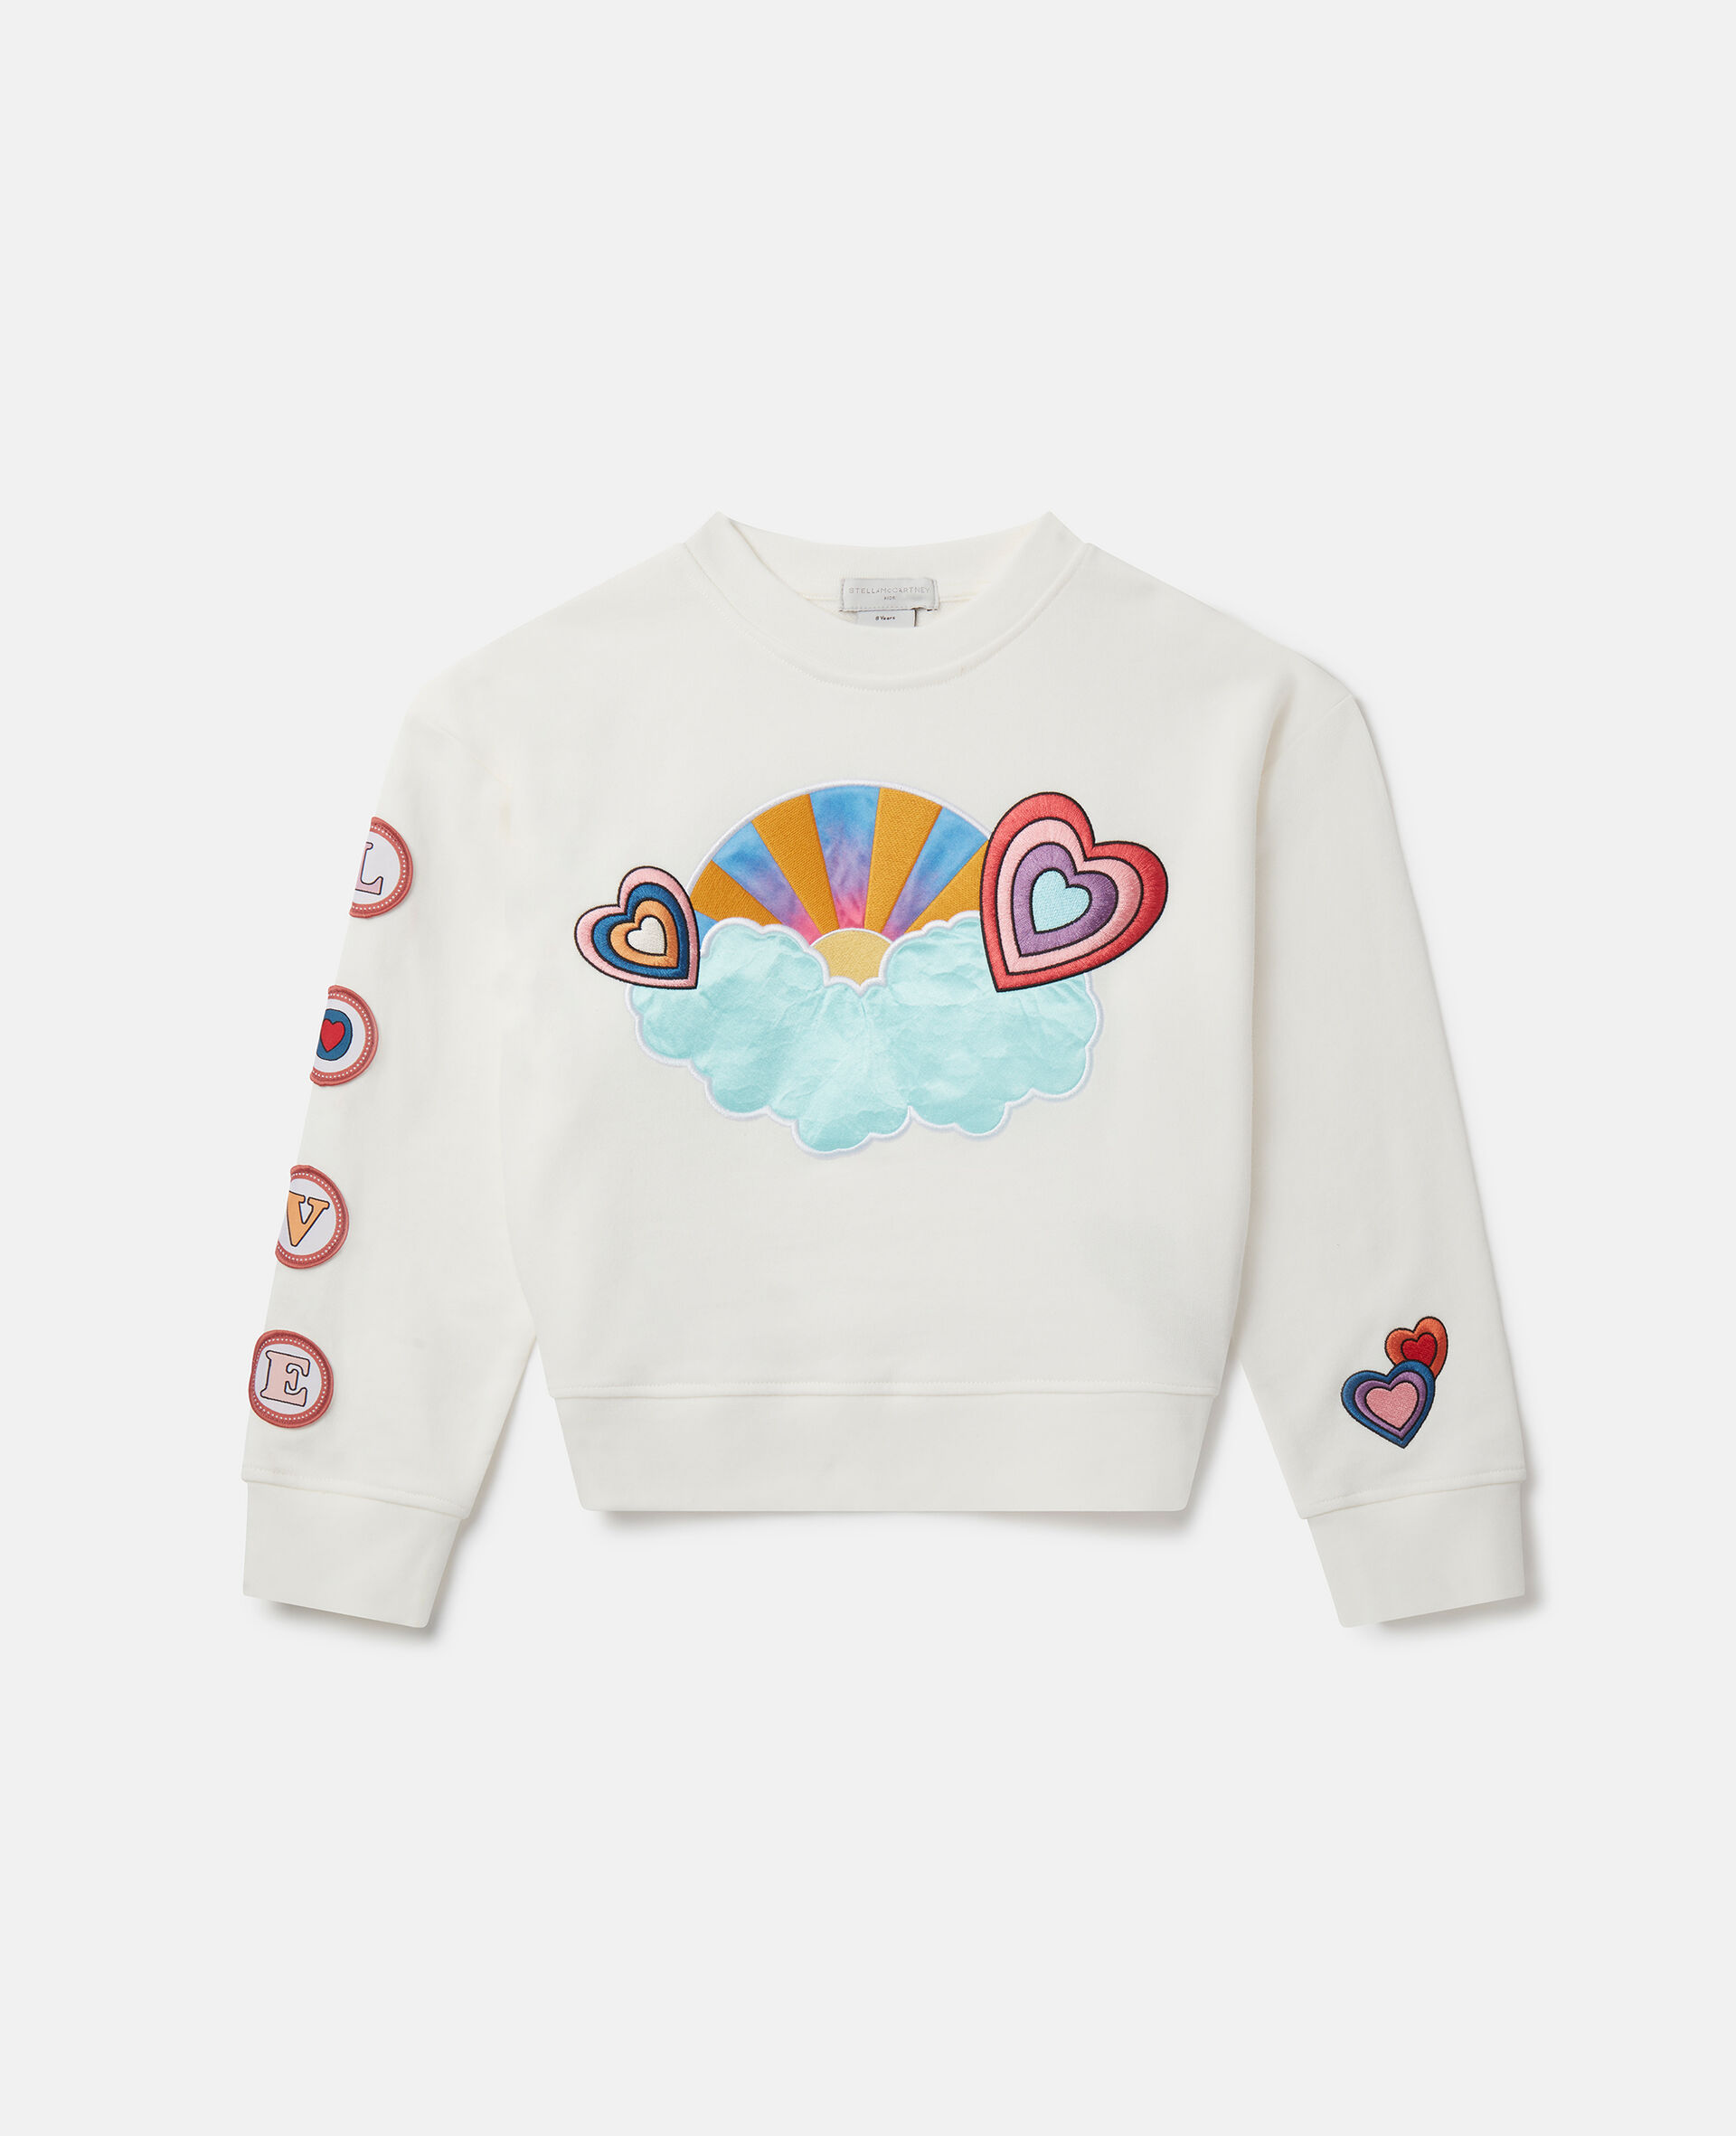 I Love You Embroidered Sweatshirt-Multicoloured-large image number 0